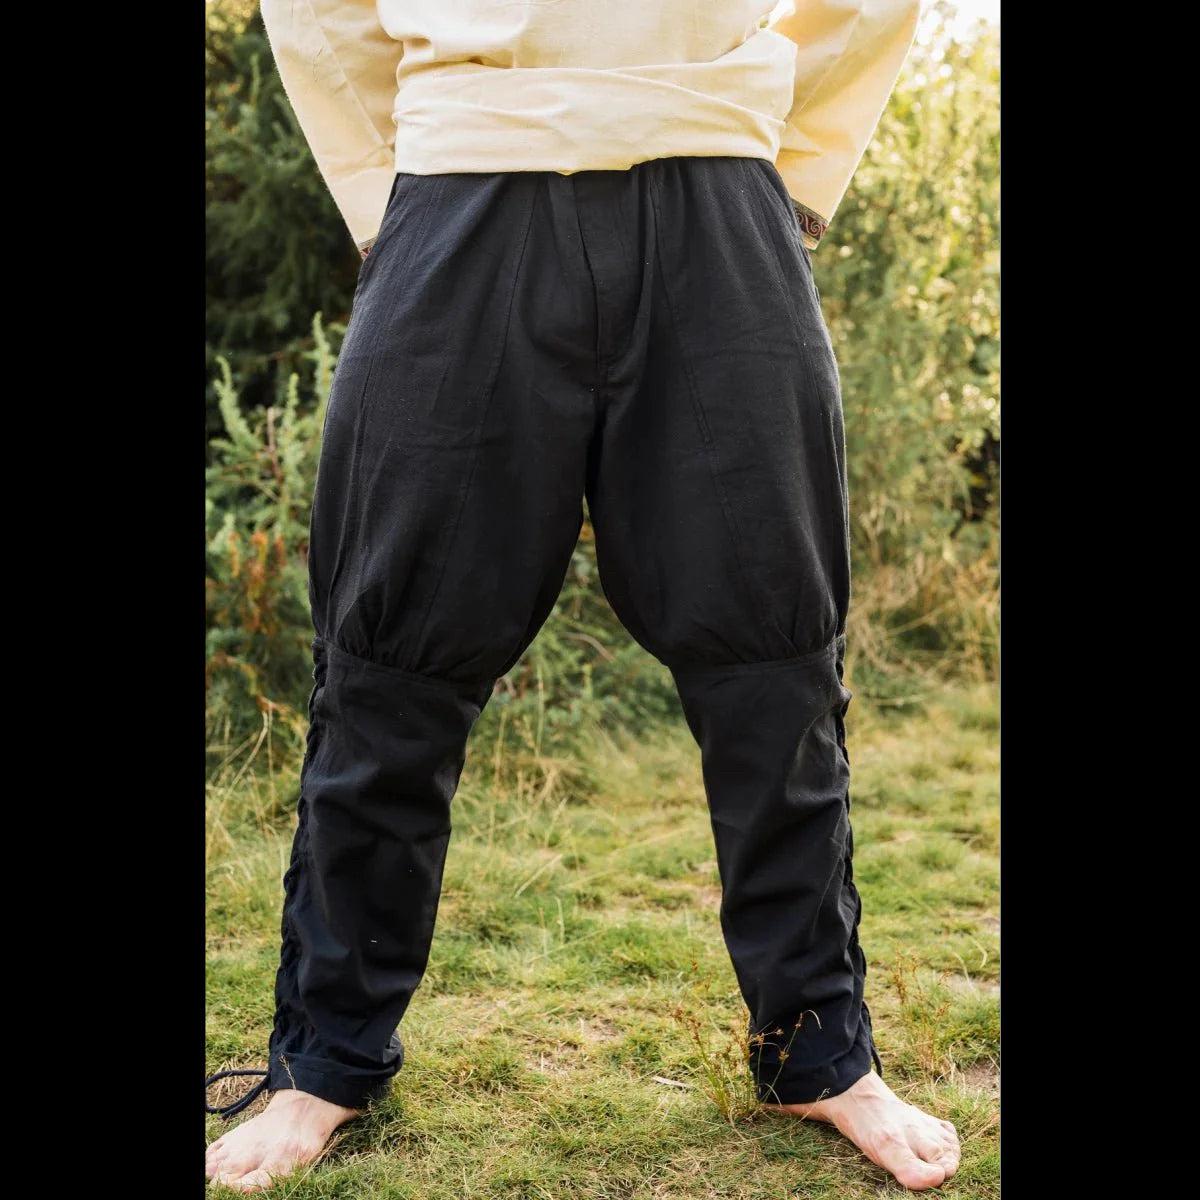 Mens Yoga Pants | Light Weight | Super Soft | By Warrior Addict UK